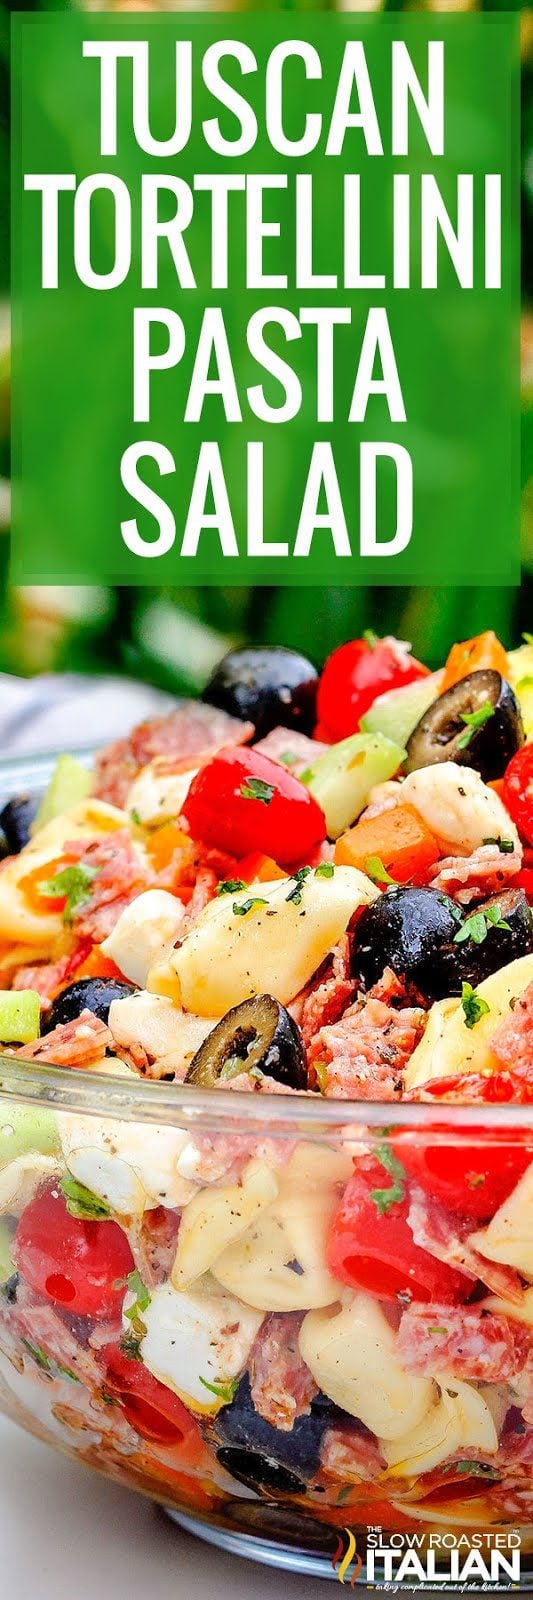 titled pinterest image for Tuscan tortellini salad recipe